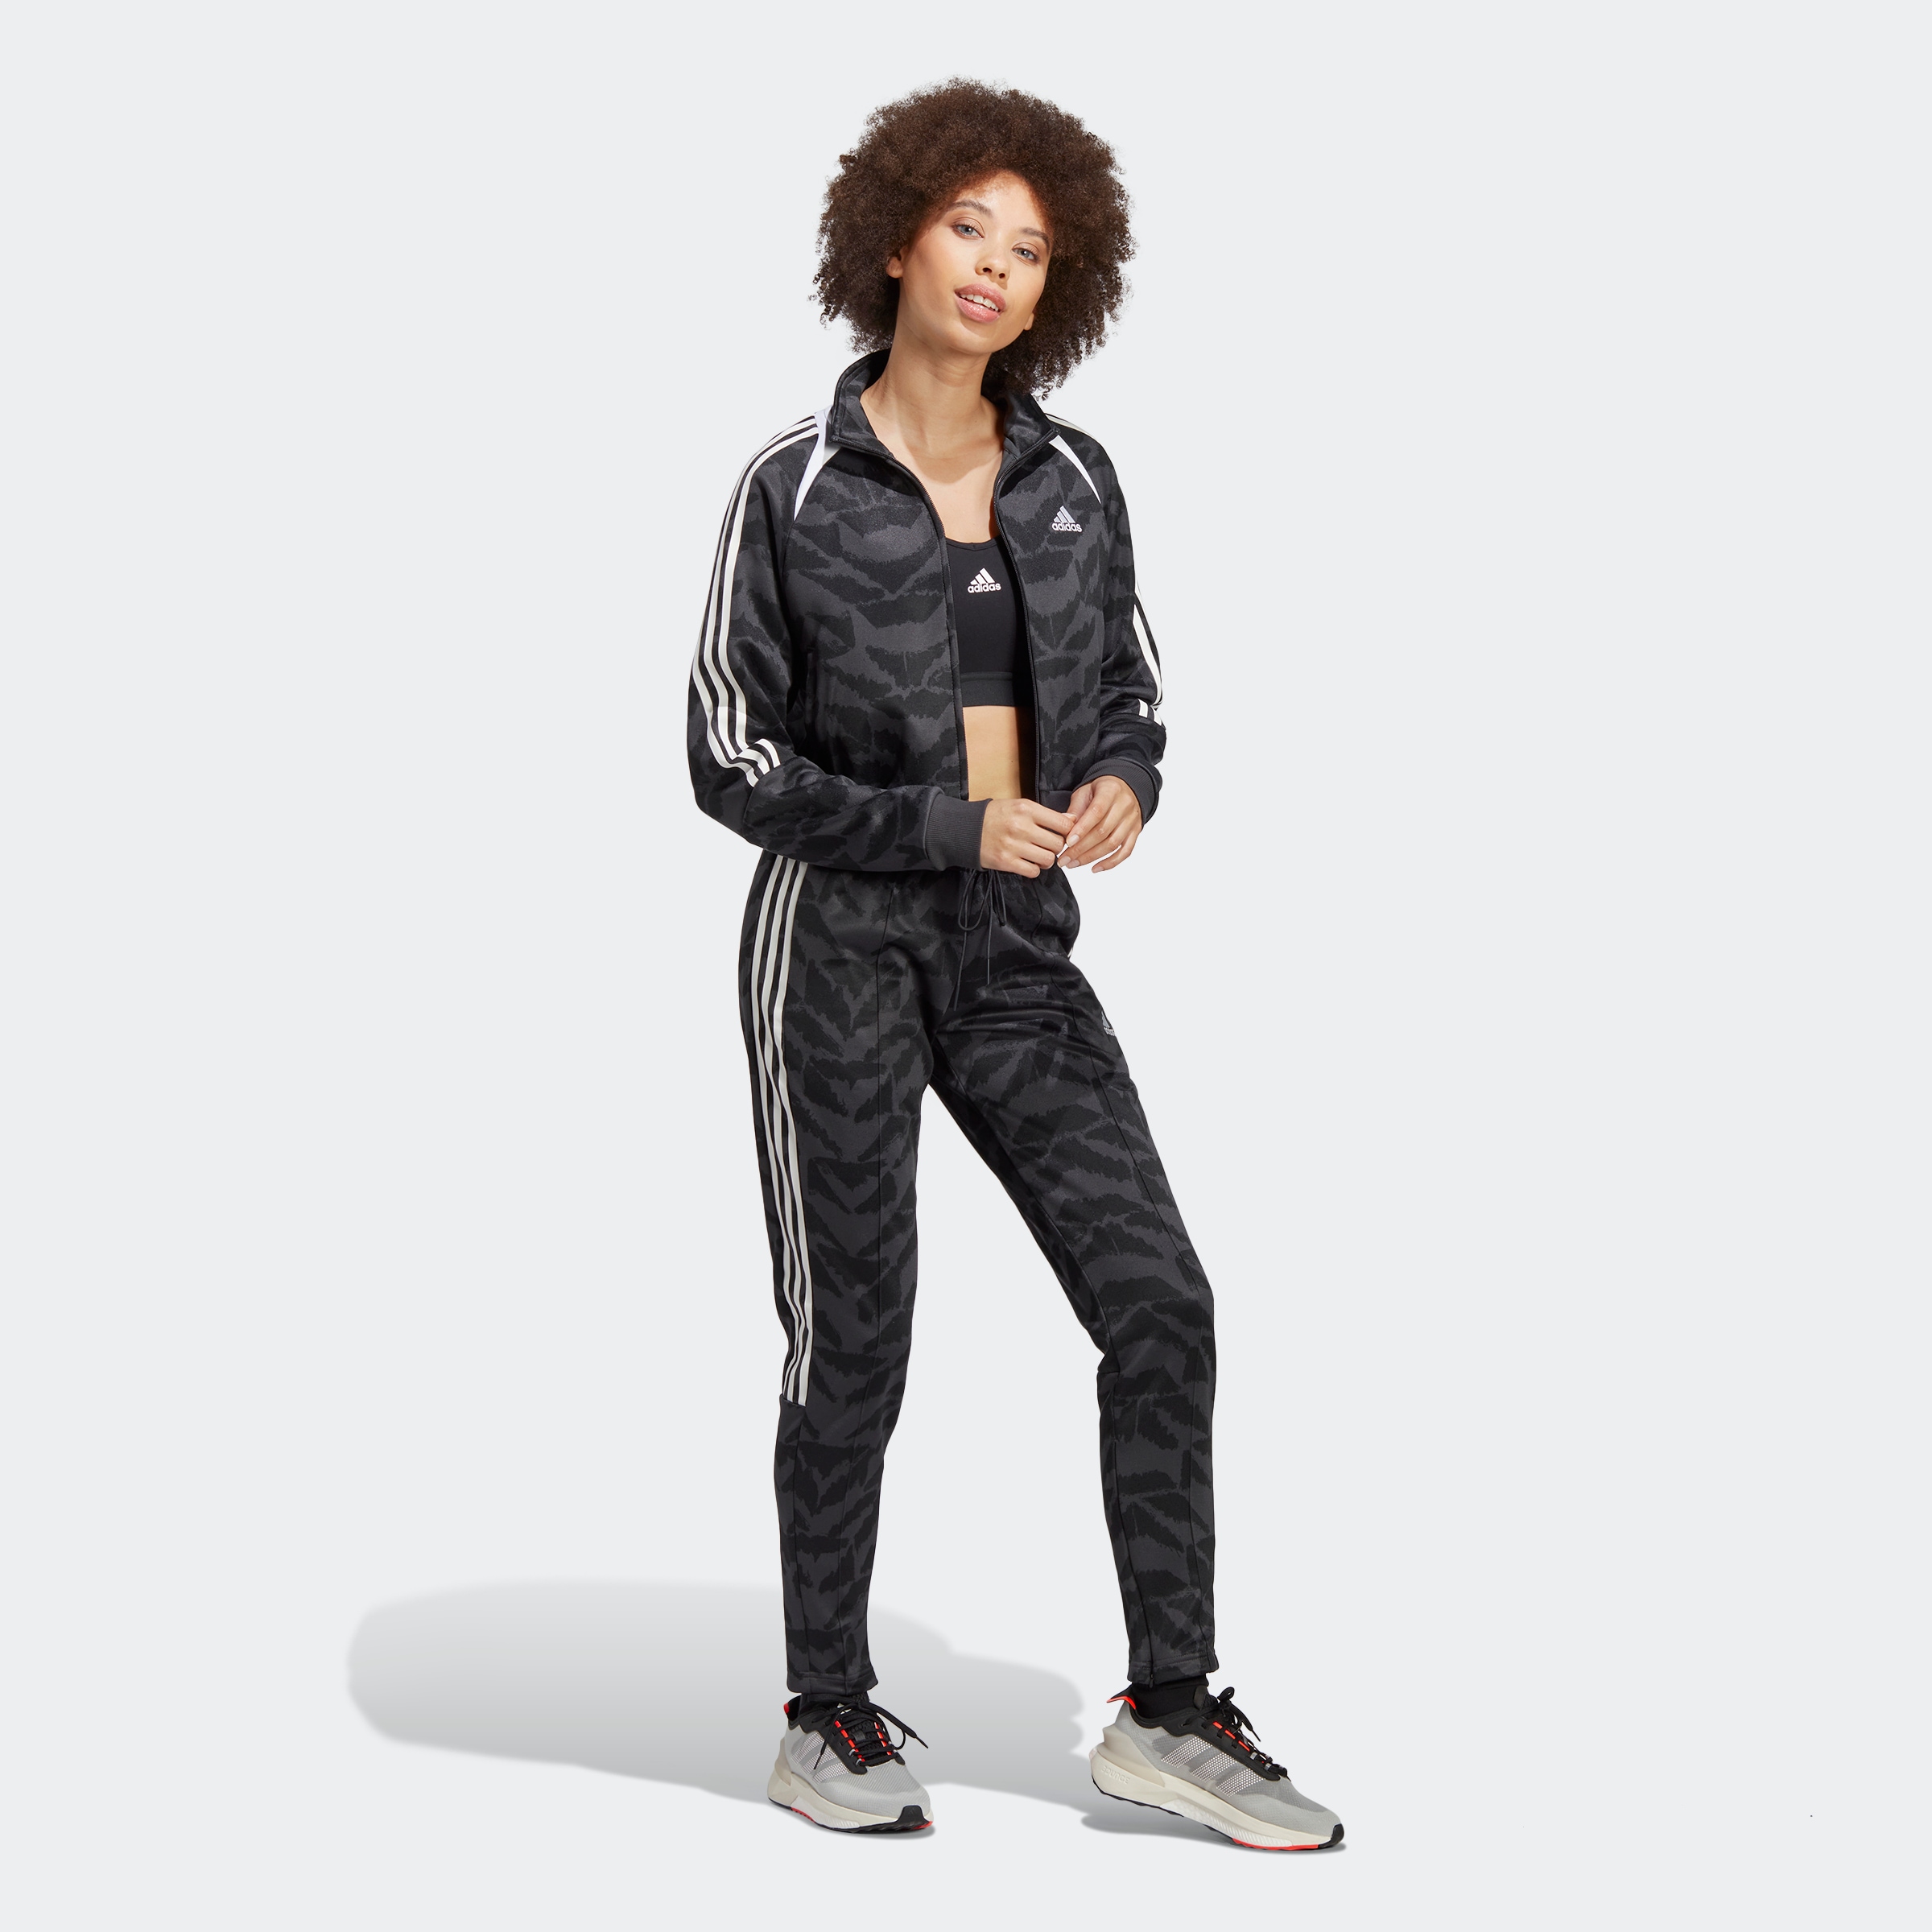 auf »TIRO adidas UP TRAININGSJACKE« Sportswear LIFESTYLE Outdoorjacke SUIT Entdecke